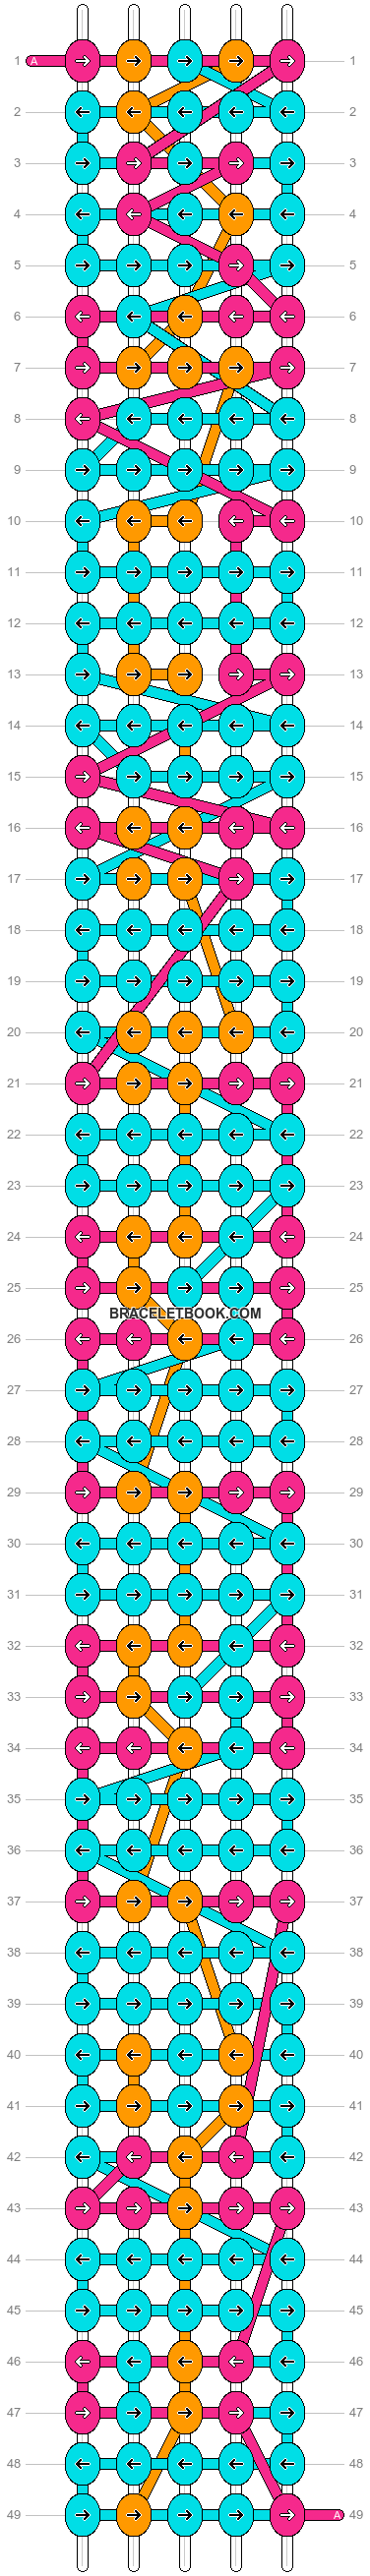 Alpha pattern #7186 variation #34446 pattern